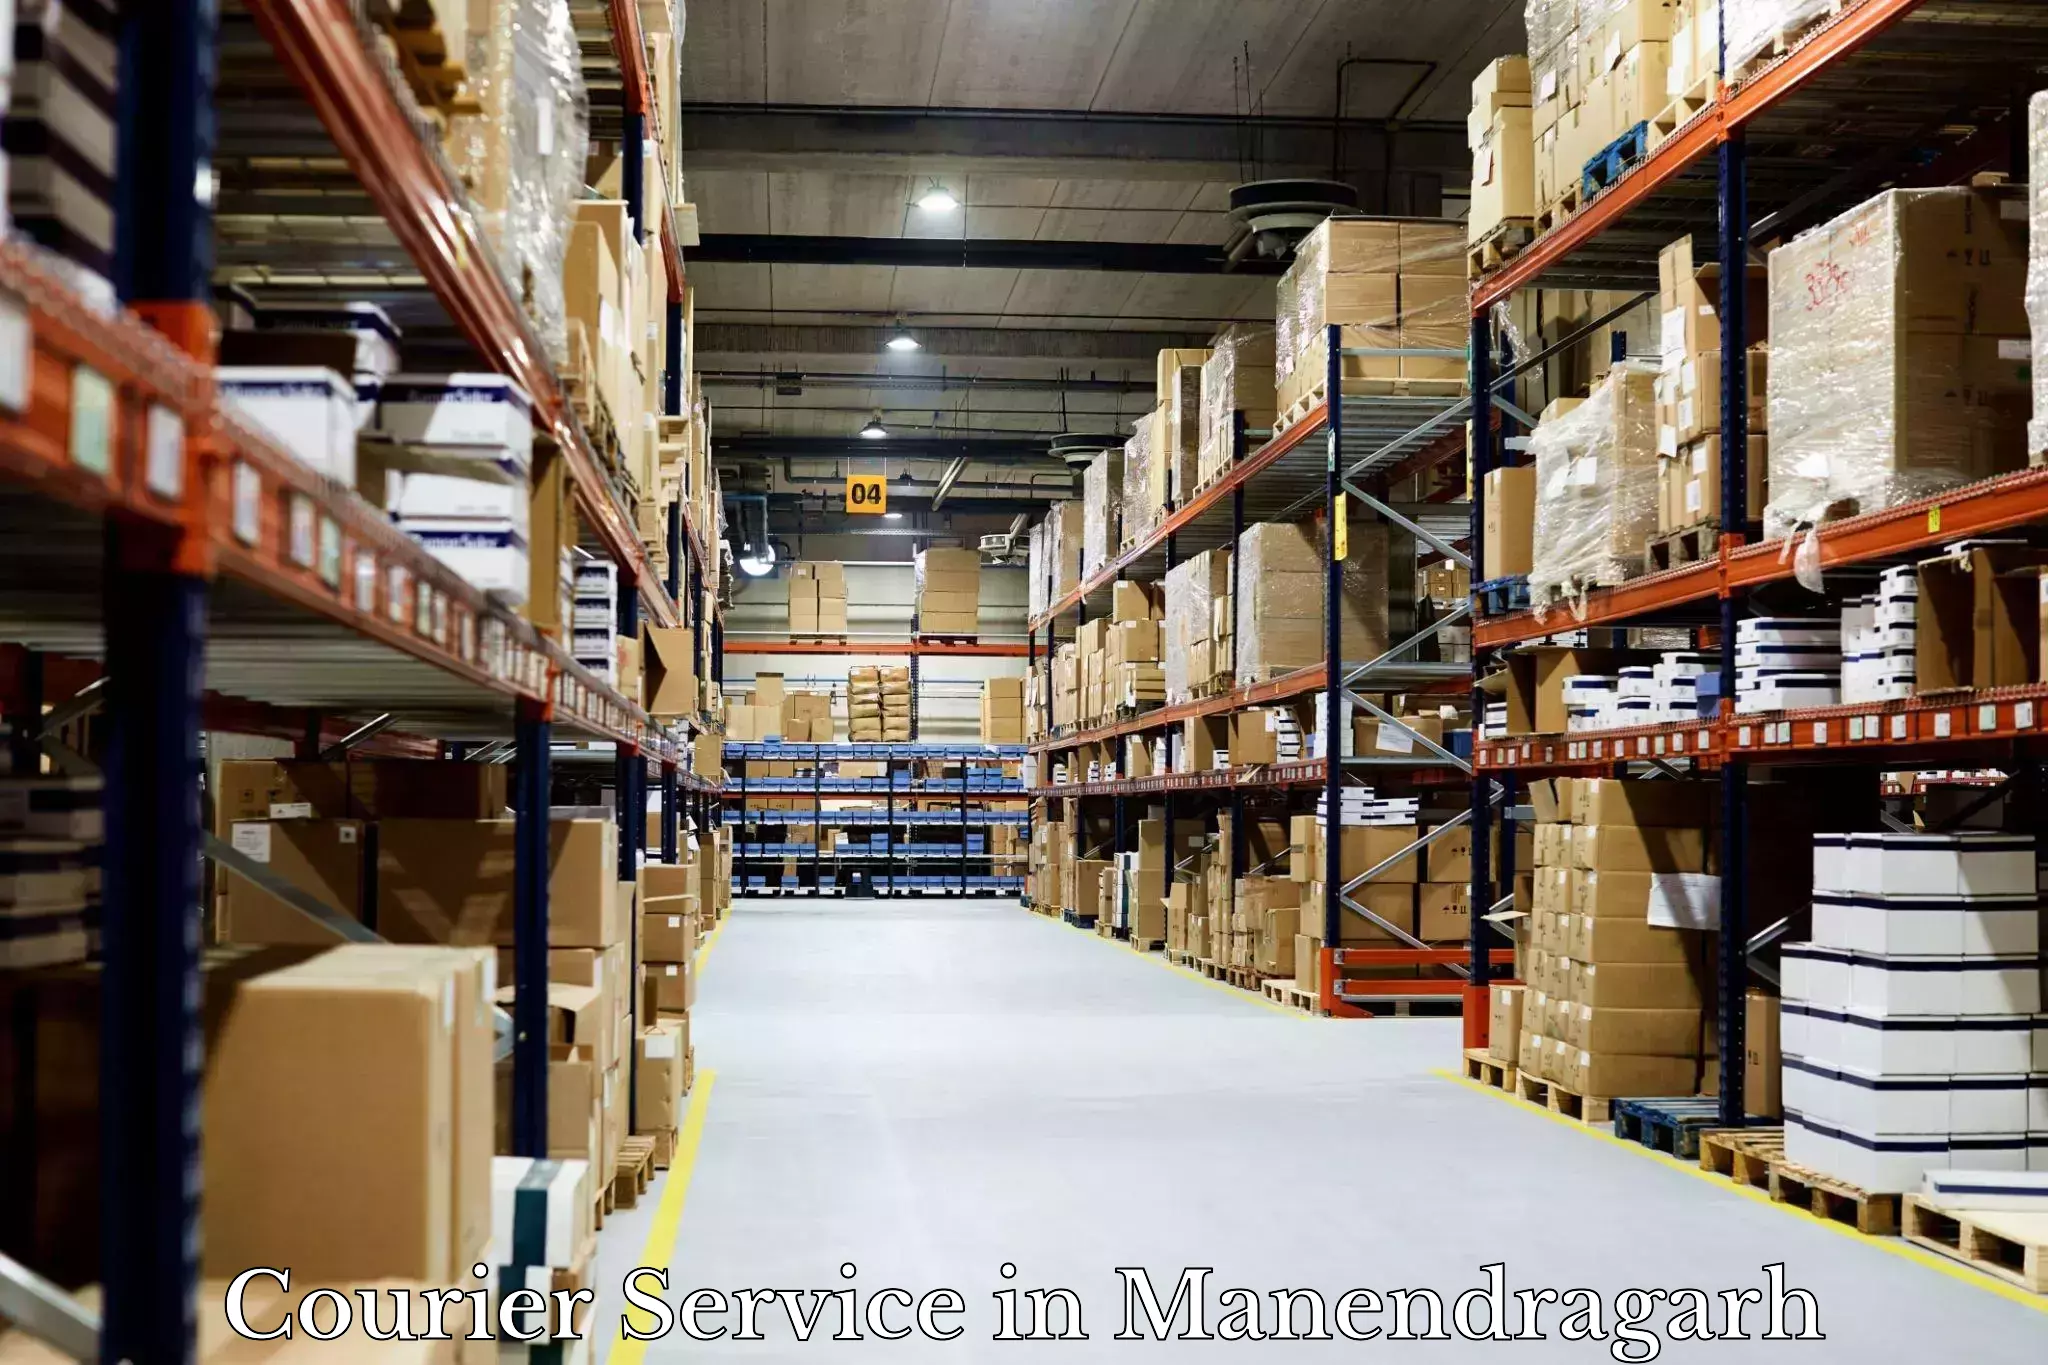 Specialized shipment handling in Manendragarh